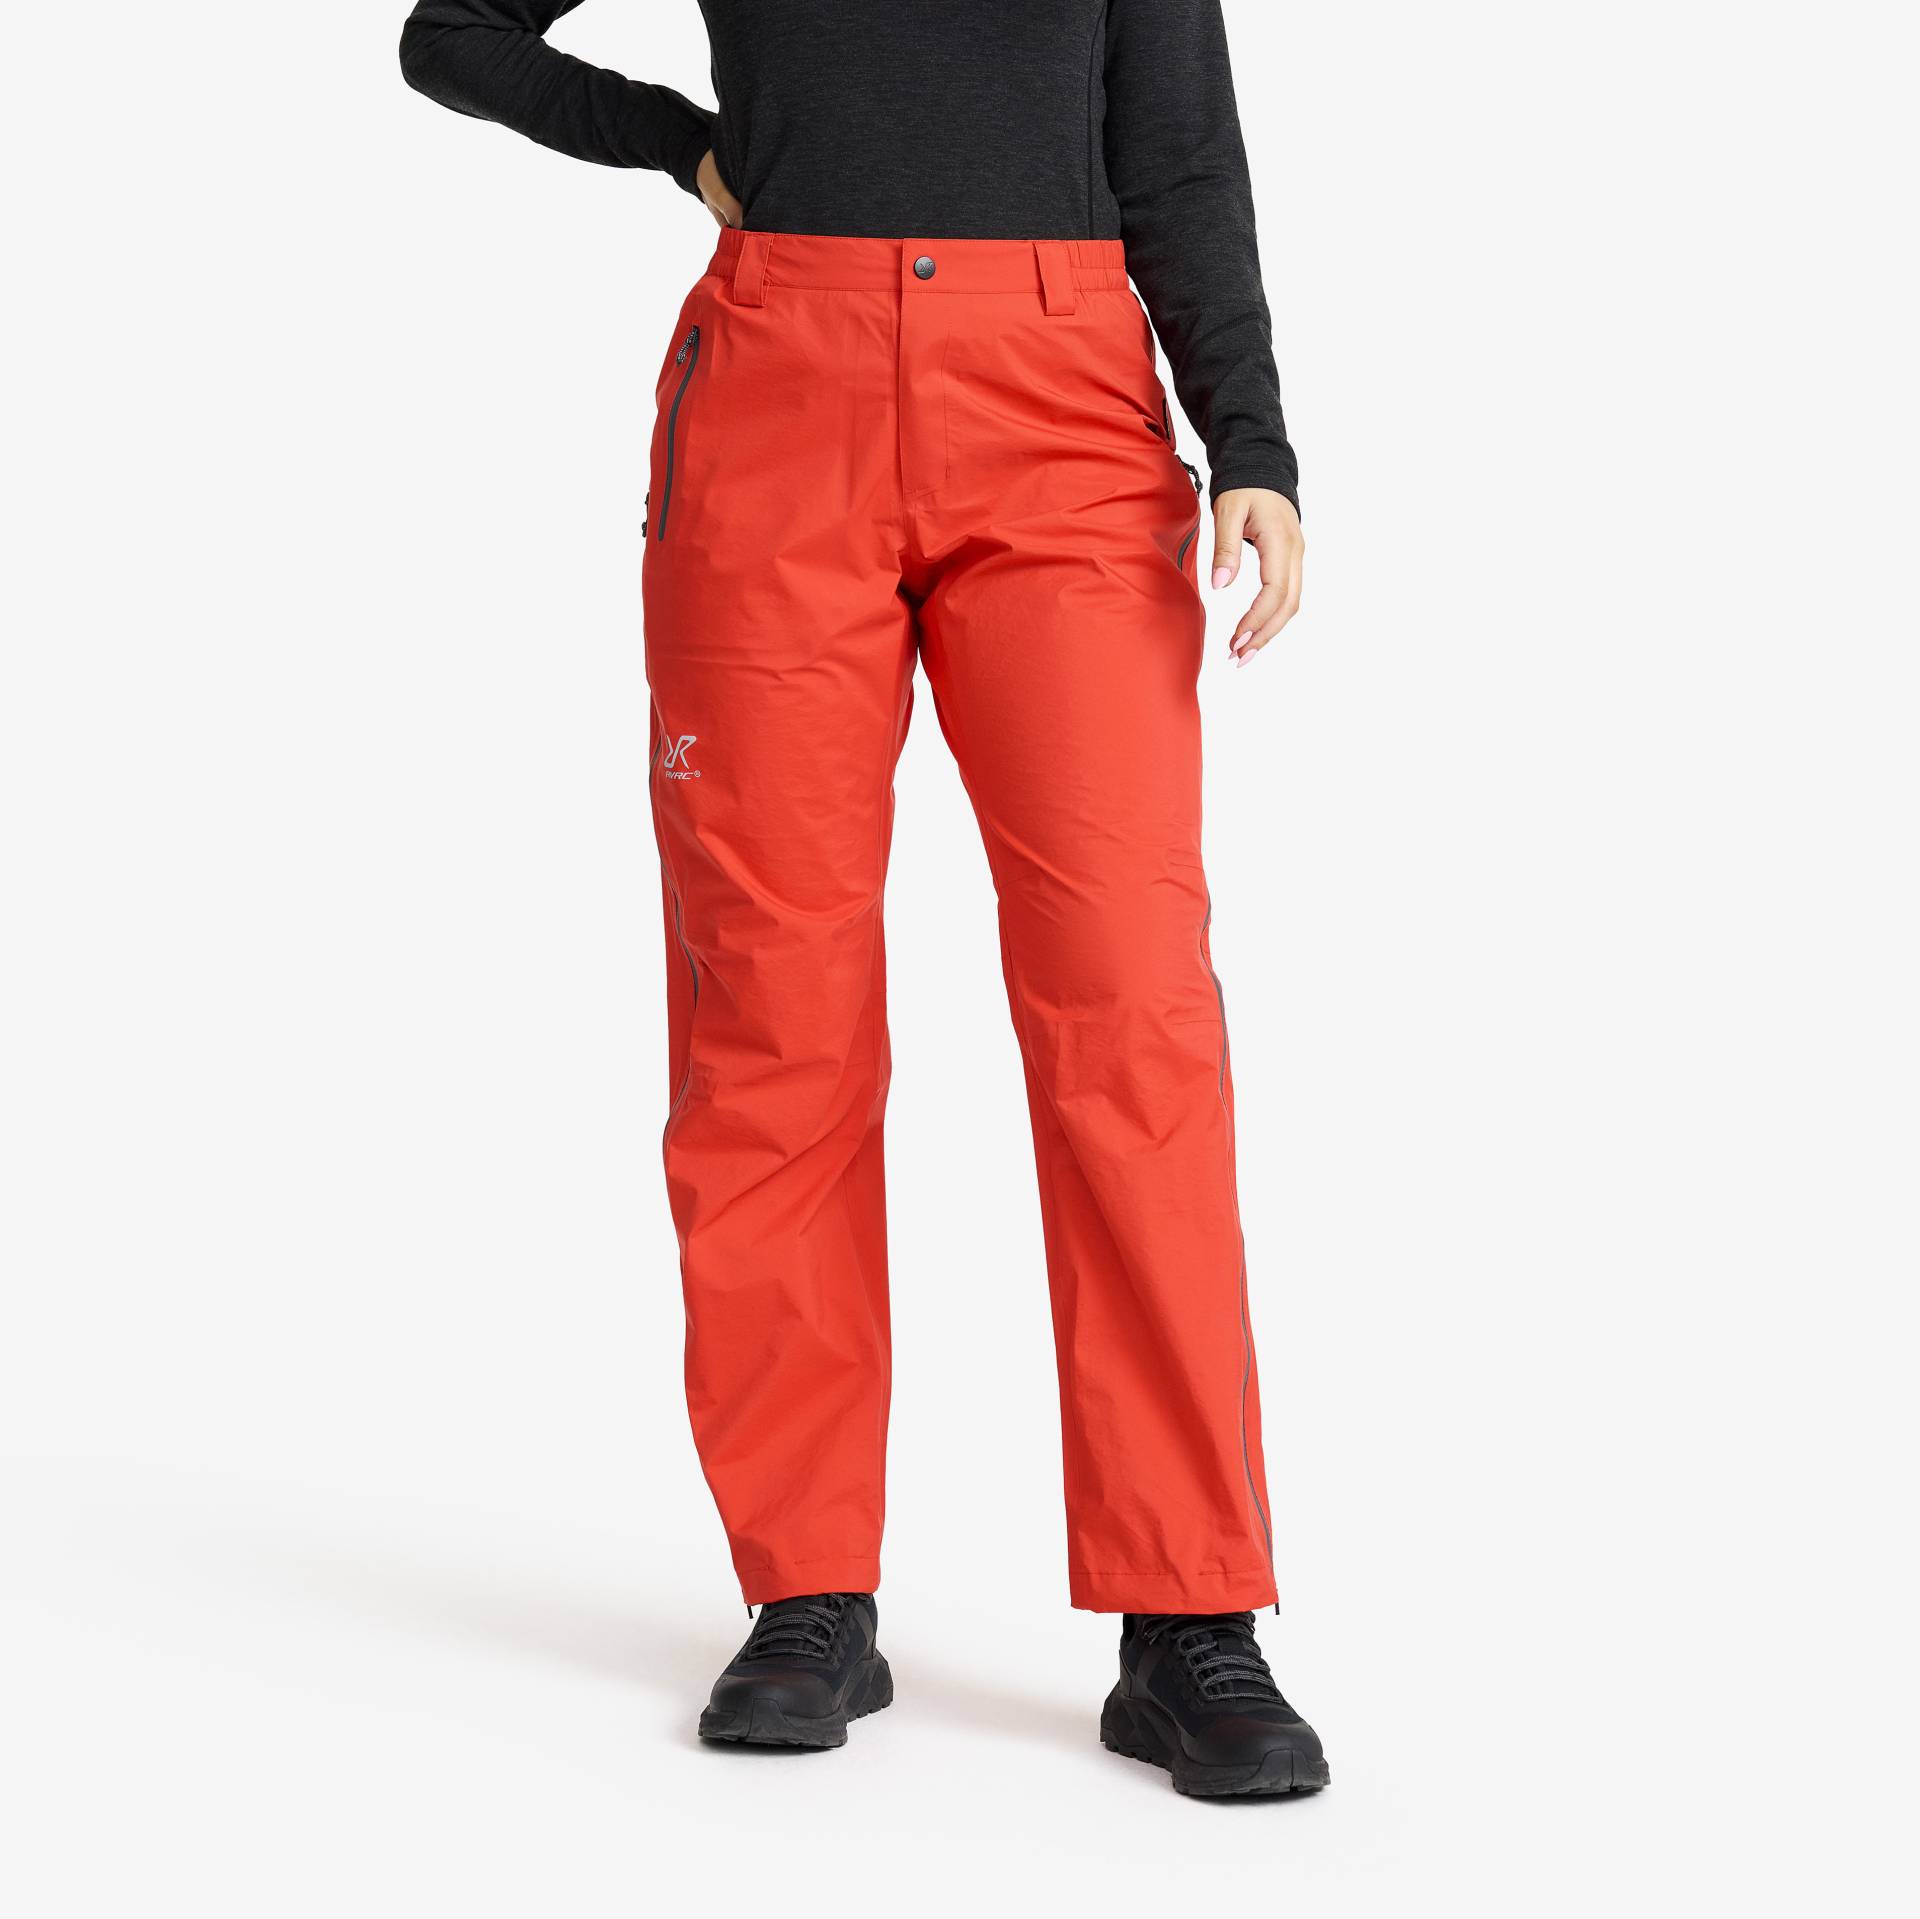 Arcade 3L Lightweight Pants Damen Cherry Tomato, Größe:2XL - Outdoorhose, Wanderhose & Trekkinghose von RevolutionRace